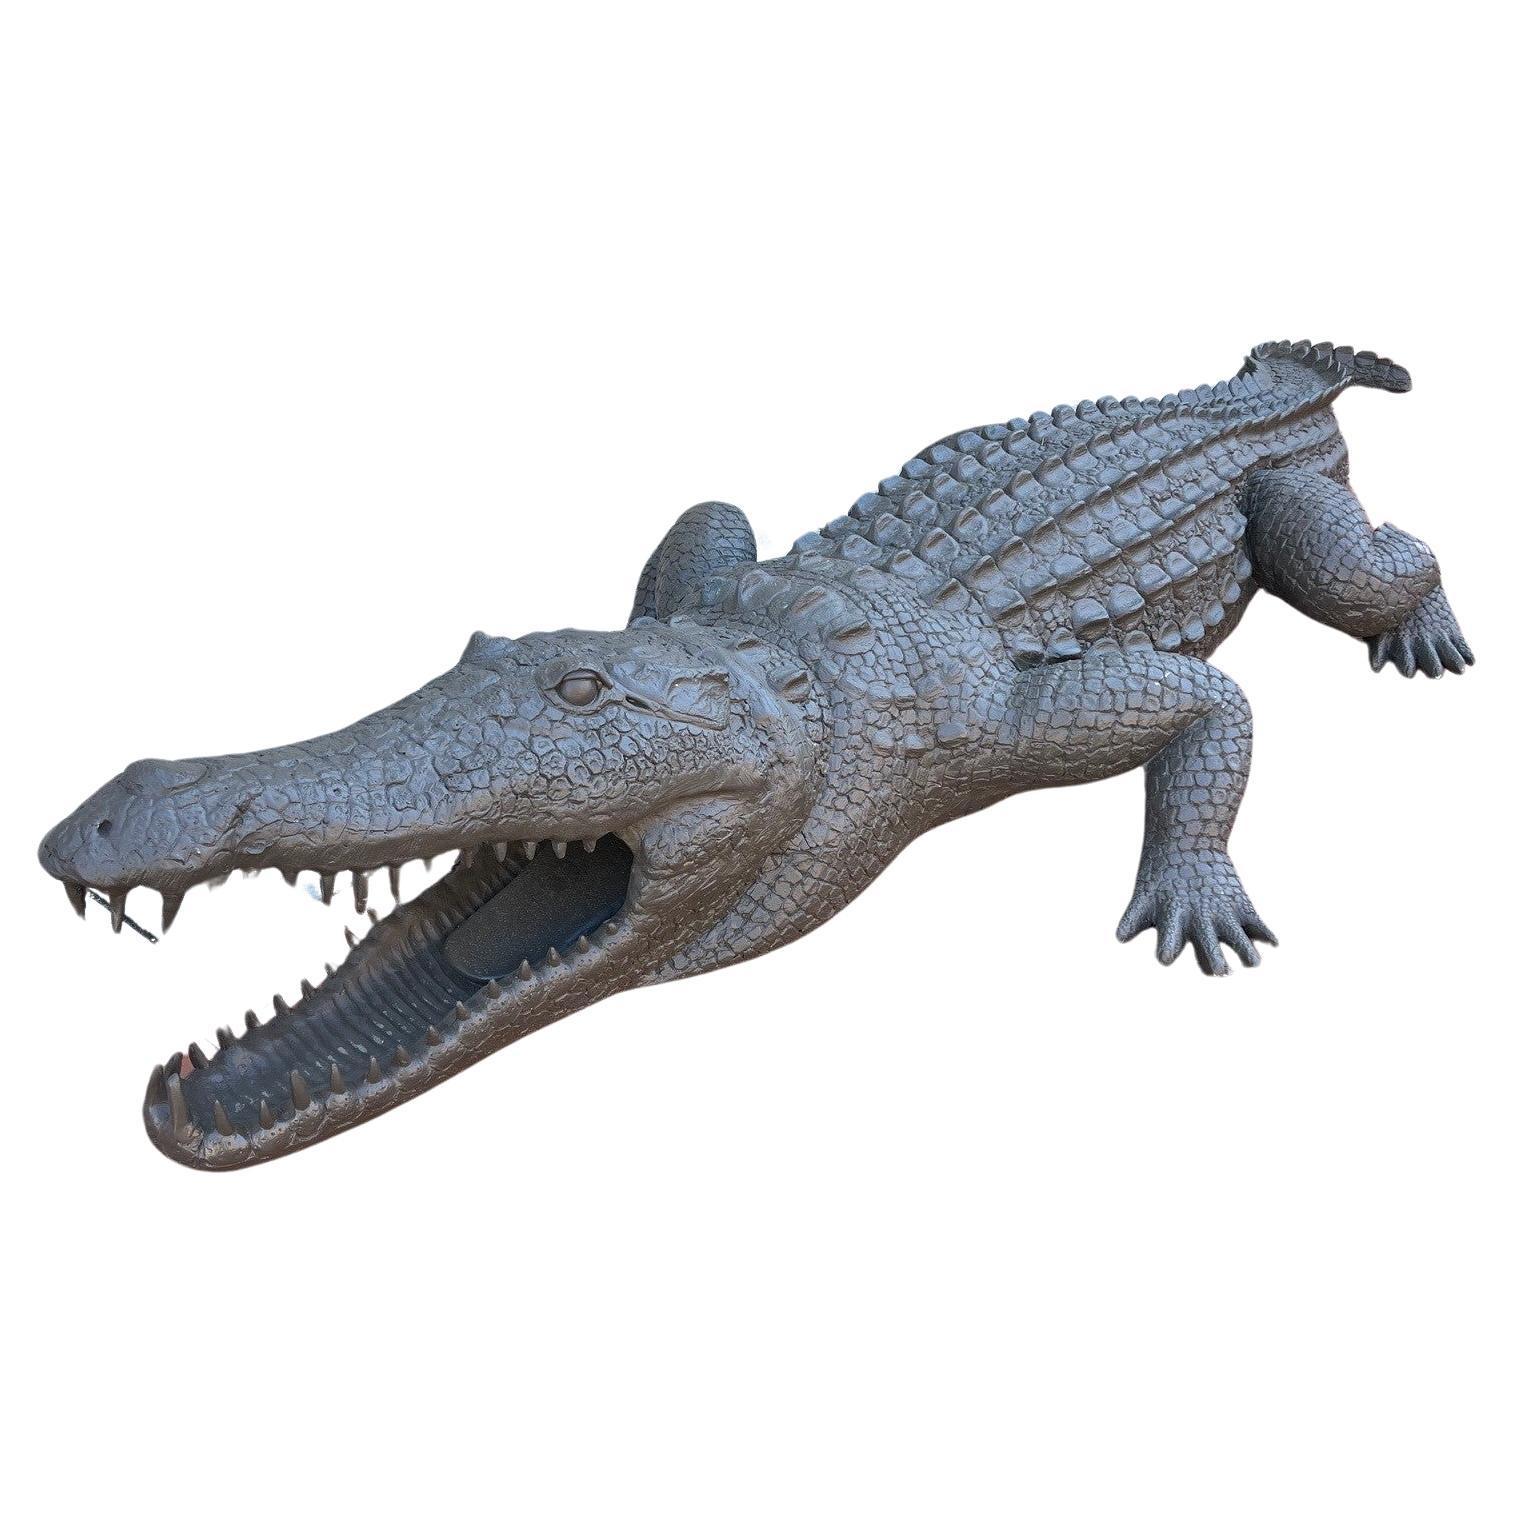 Grand alligator américain en fibre de verre grandeur nature 